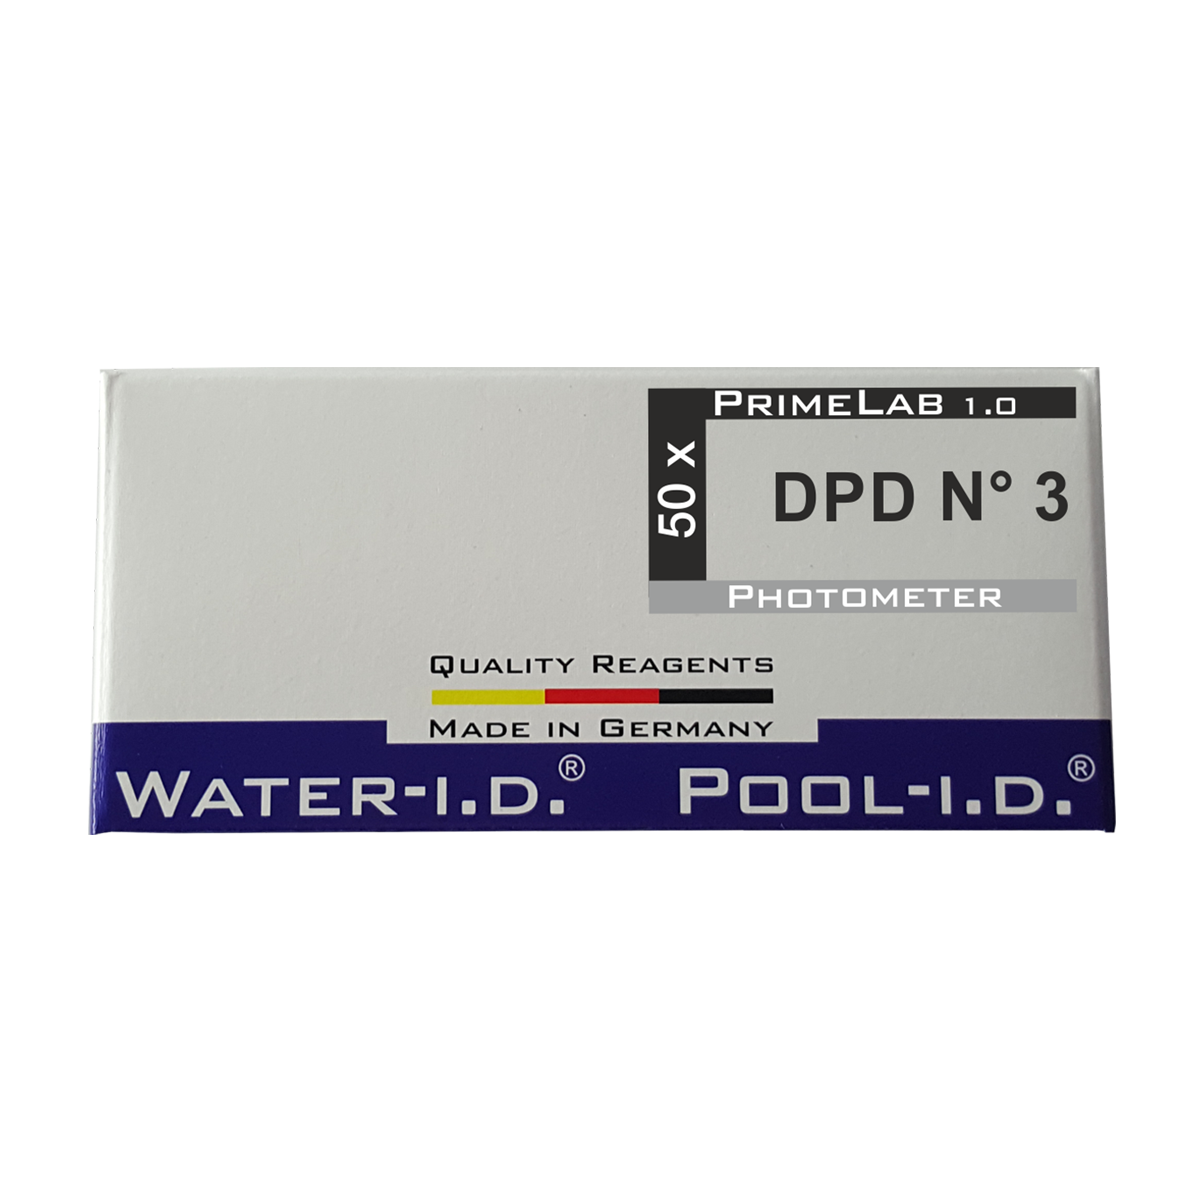 DPD 3 Chlorine Tablets for Smart Pool Lab 1.0 Photometer, 1 unit = 50 pcs. DPD 3 Chlorine Tablets for Smart Pool Lab 1.0 Photometer, 1 unit = 50 pcs.